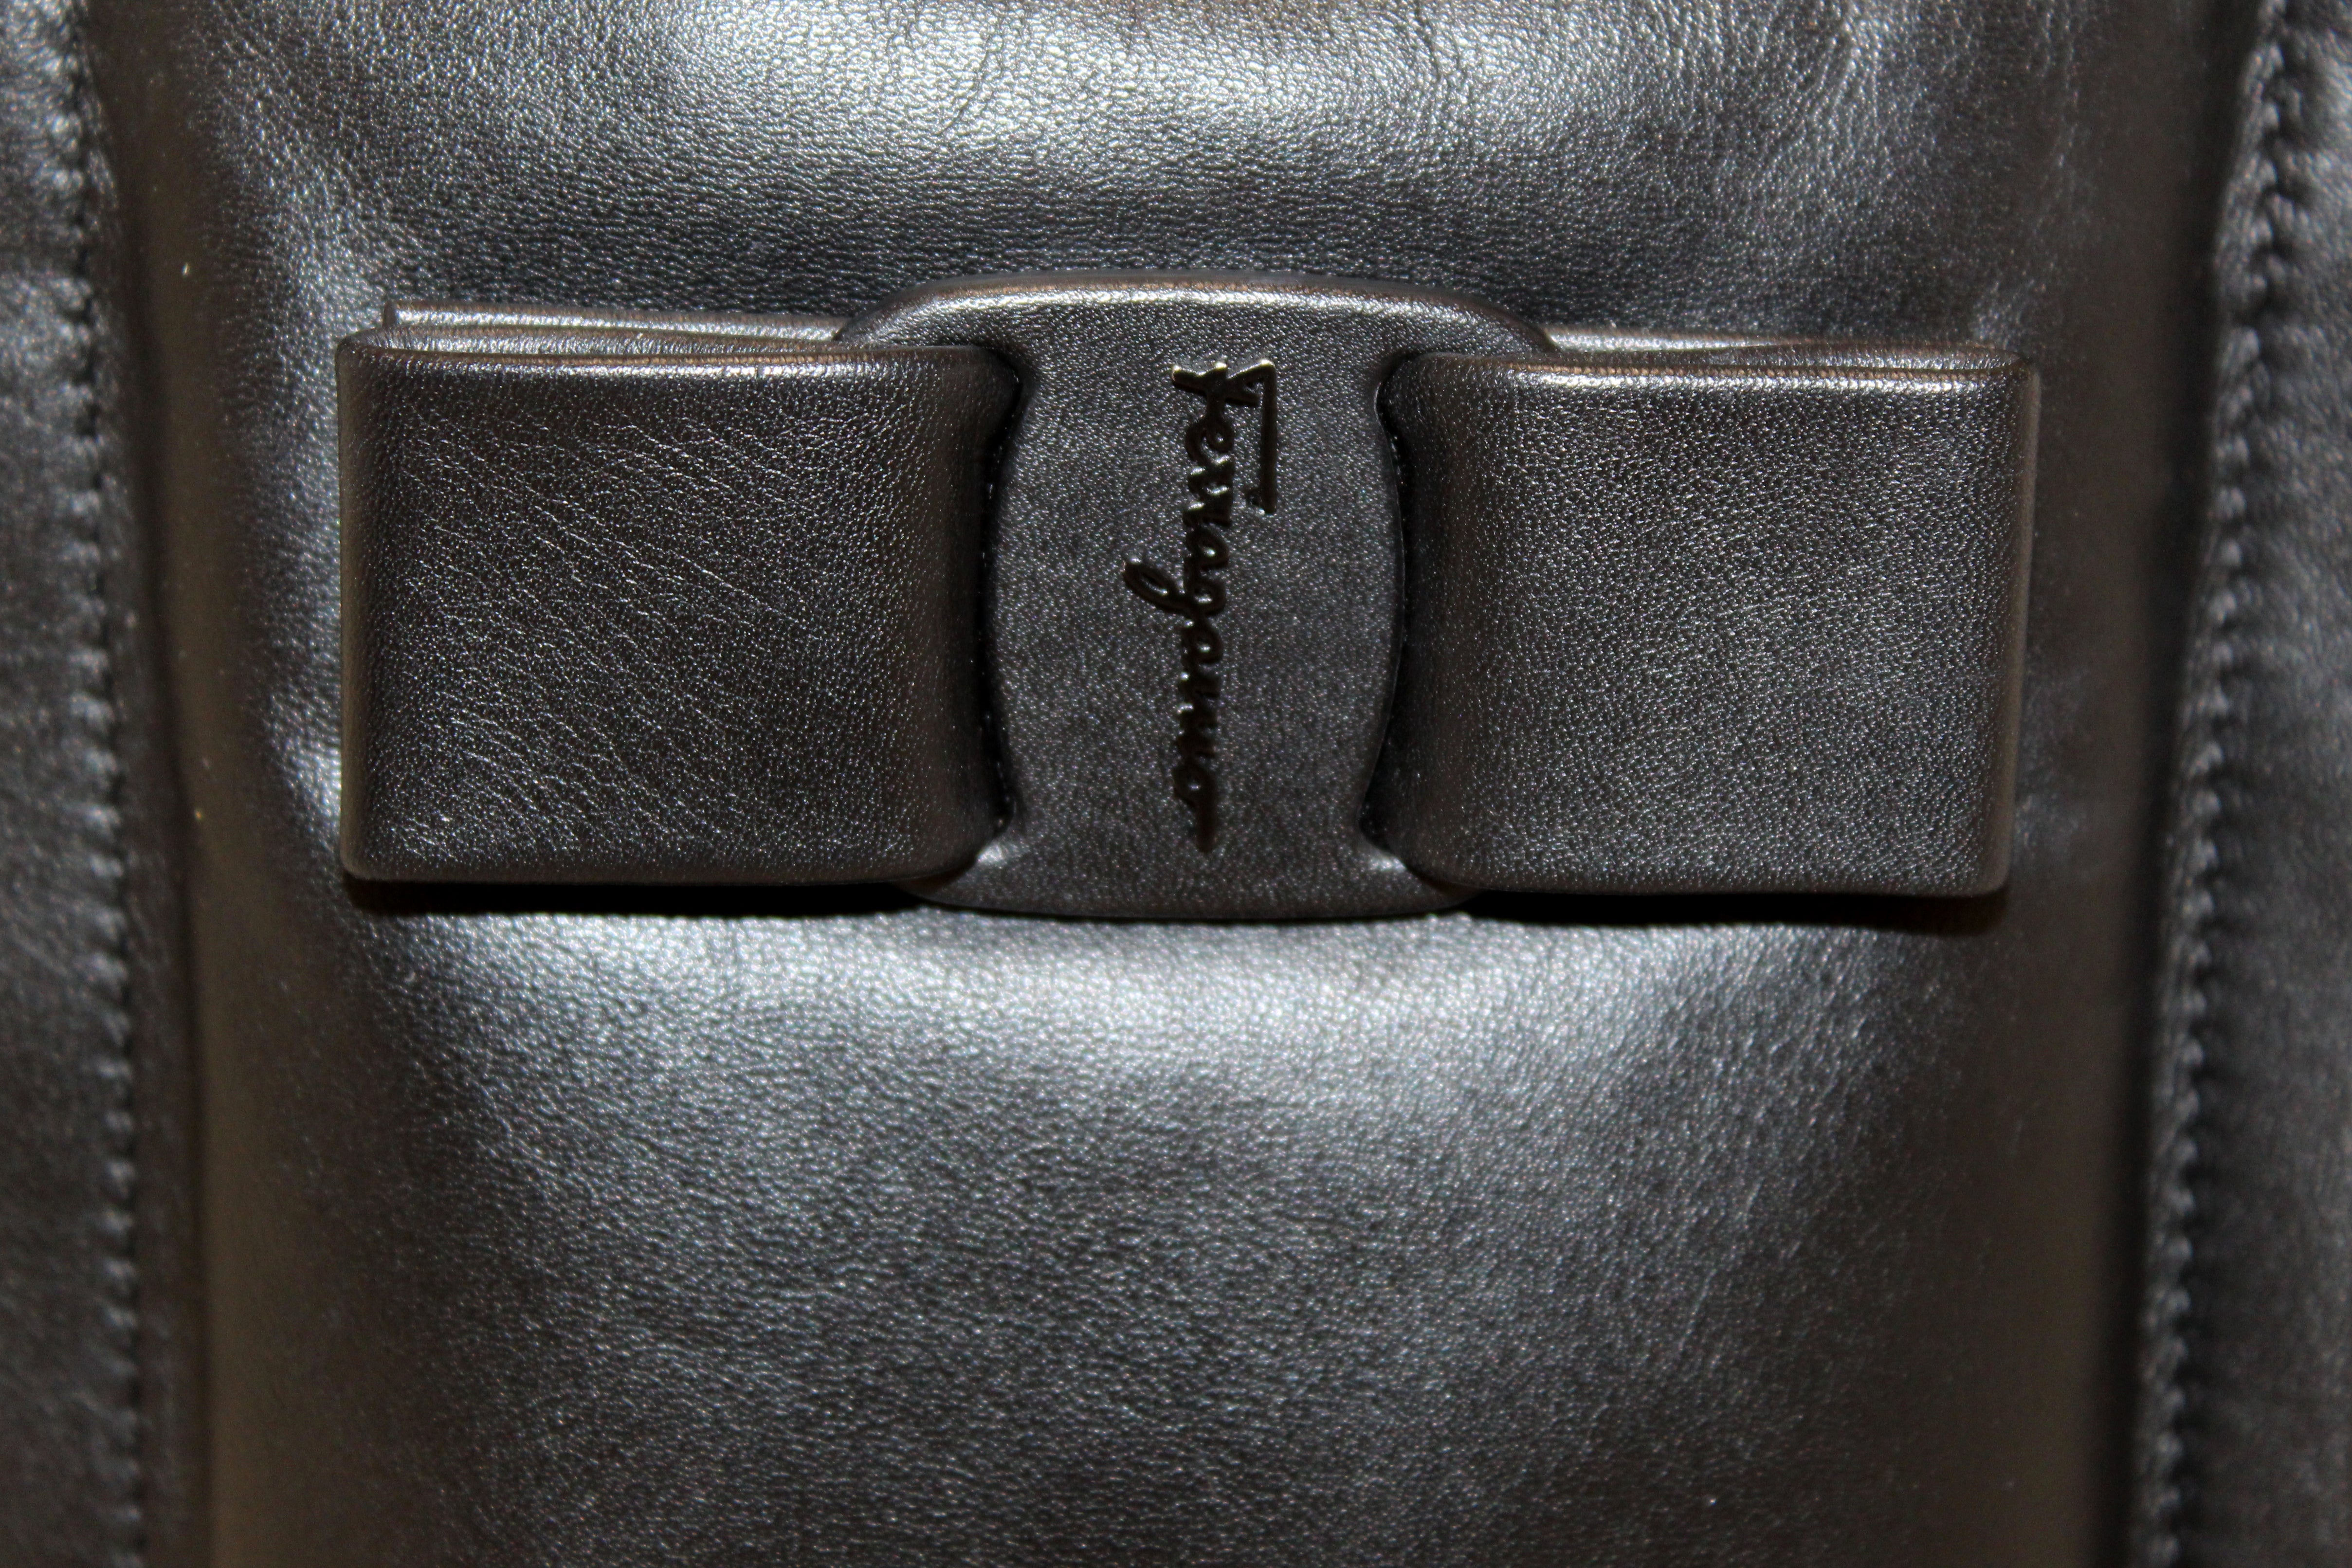 Authentic Salvatore Ferragamo Black Leather Viva Bow Smartphone Case Bag